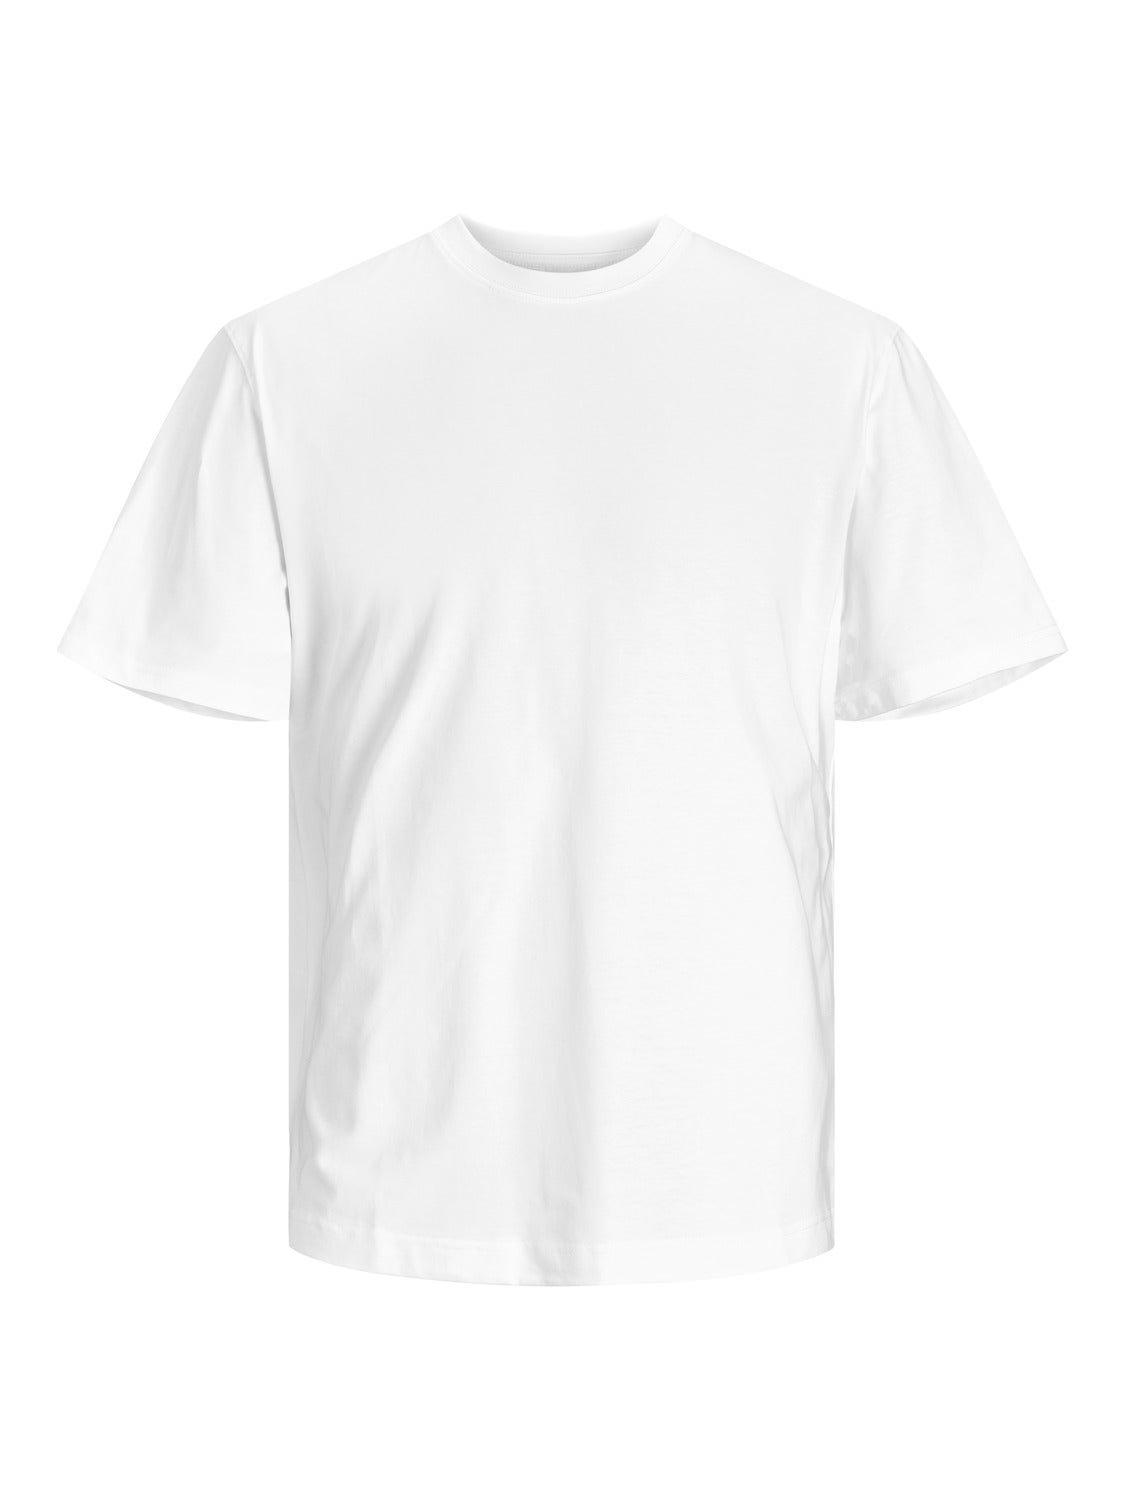 White T-shirt & Jack | neck | Crew Plain Jones®